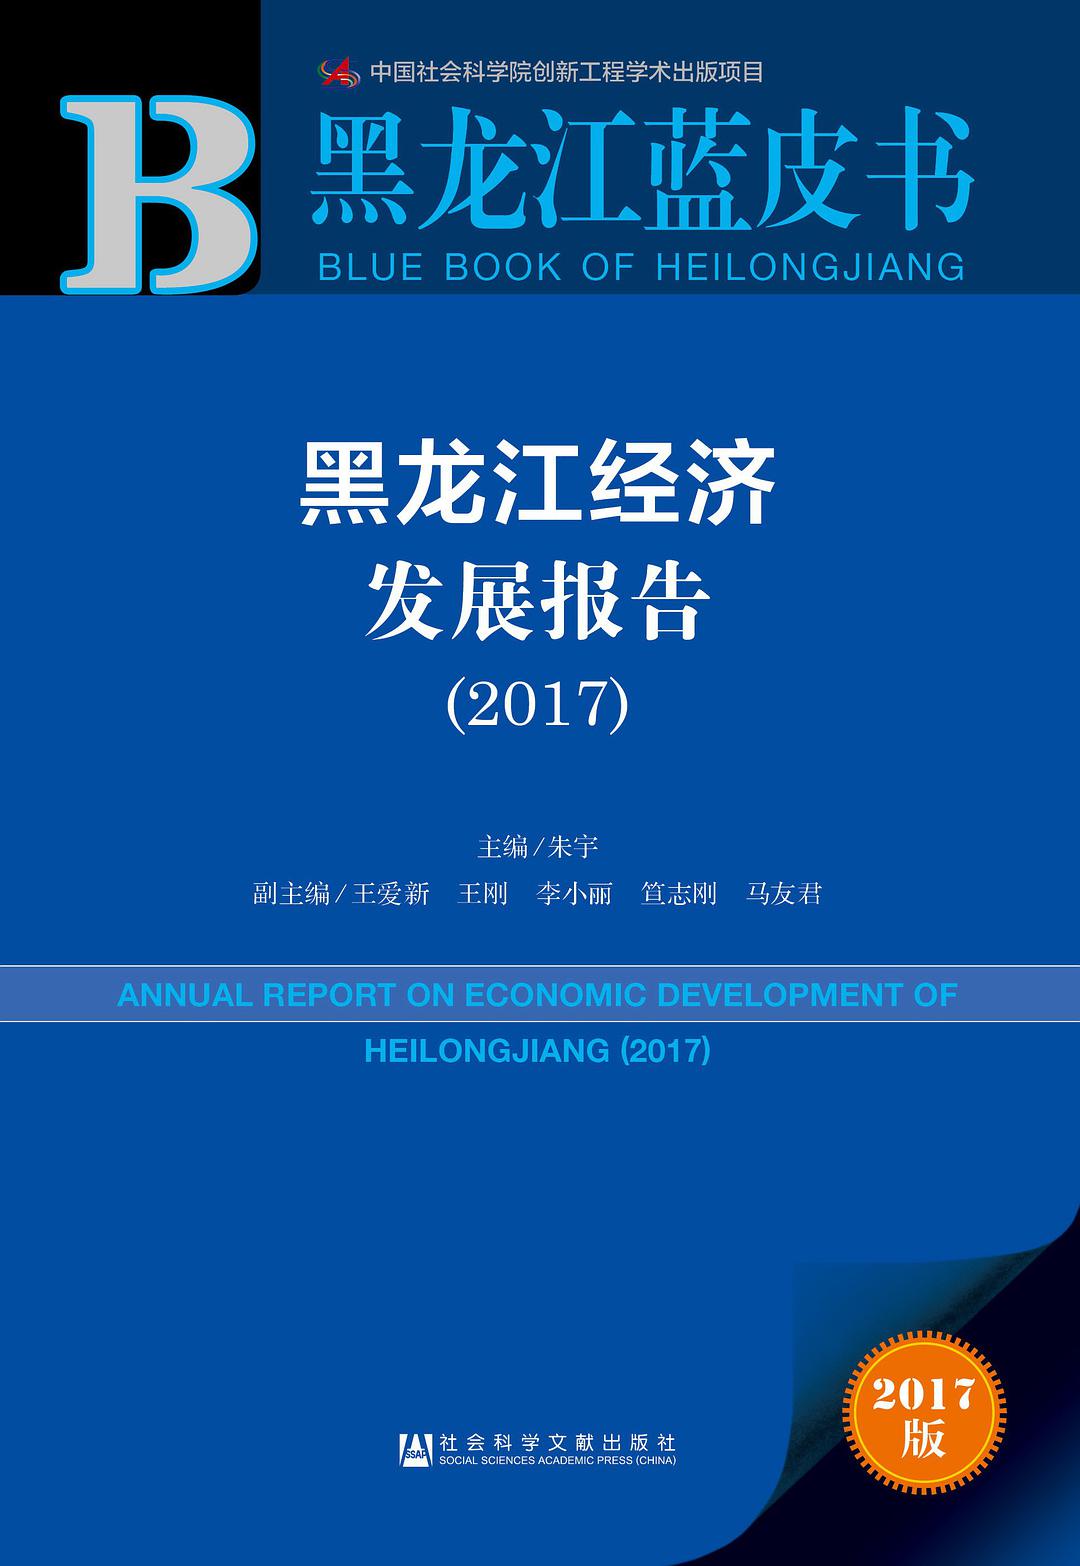 Annual report on development of Henan. 河南发展报告.